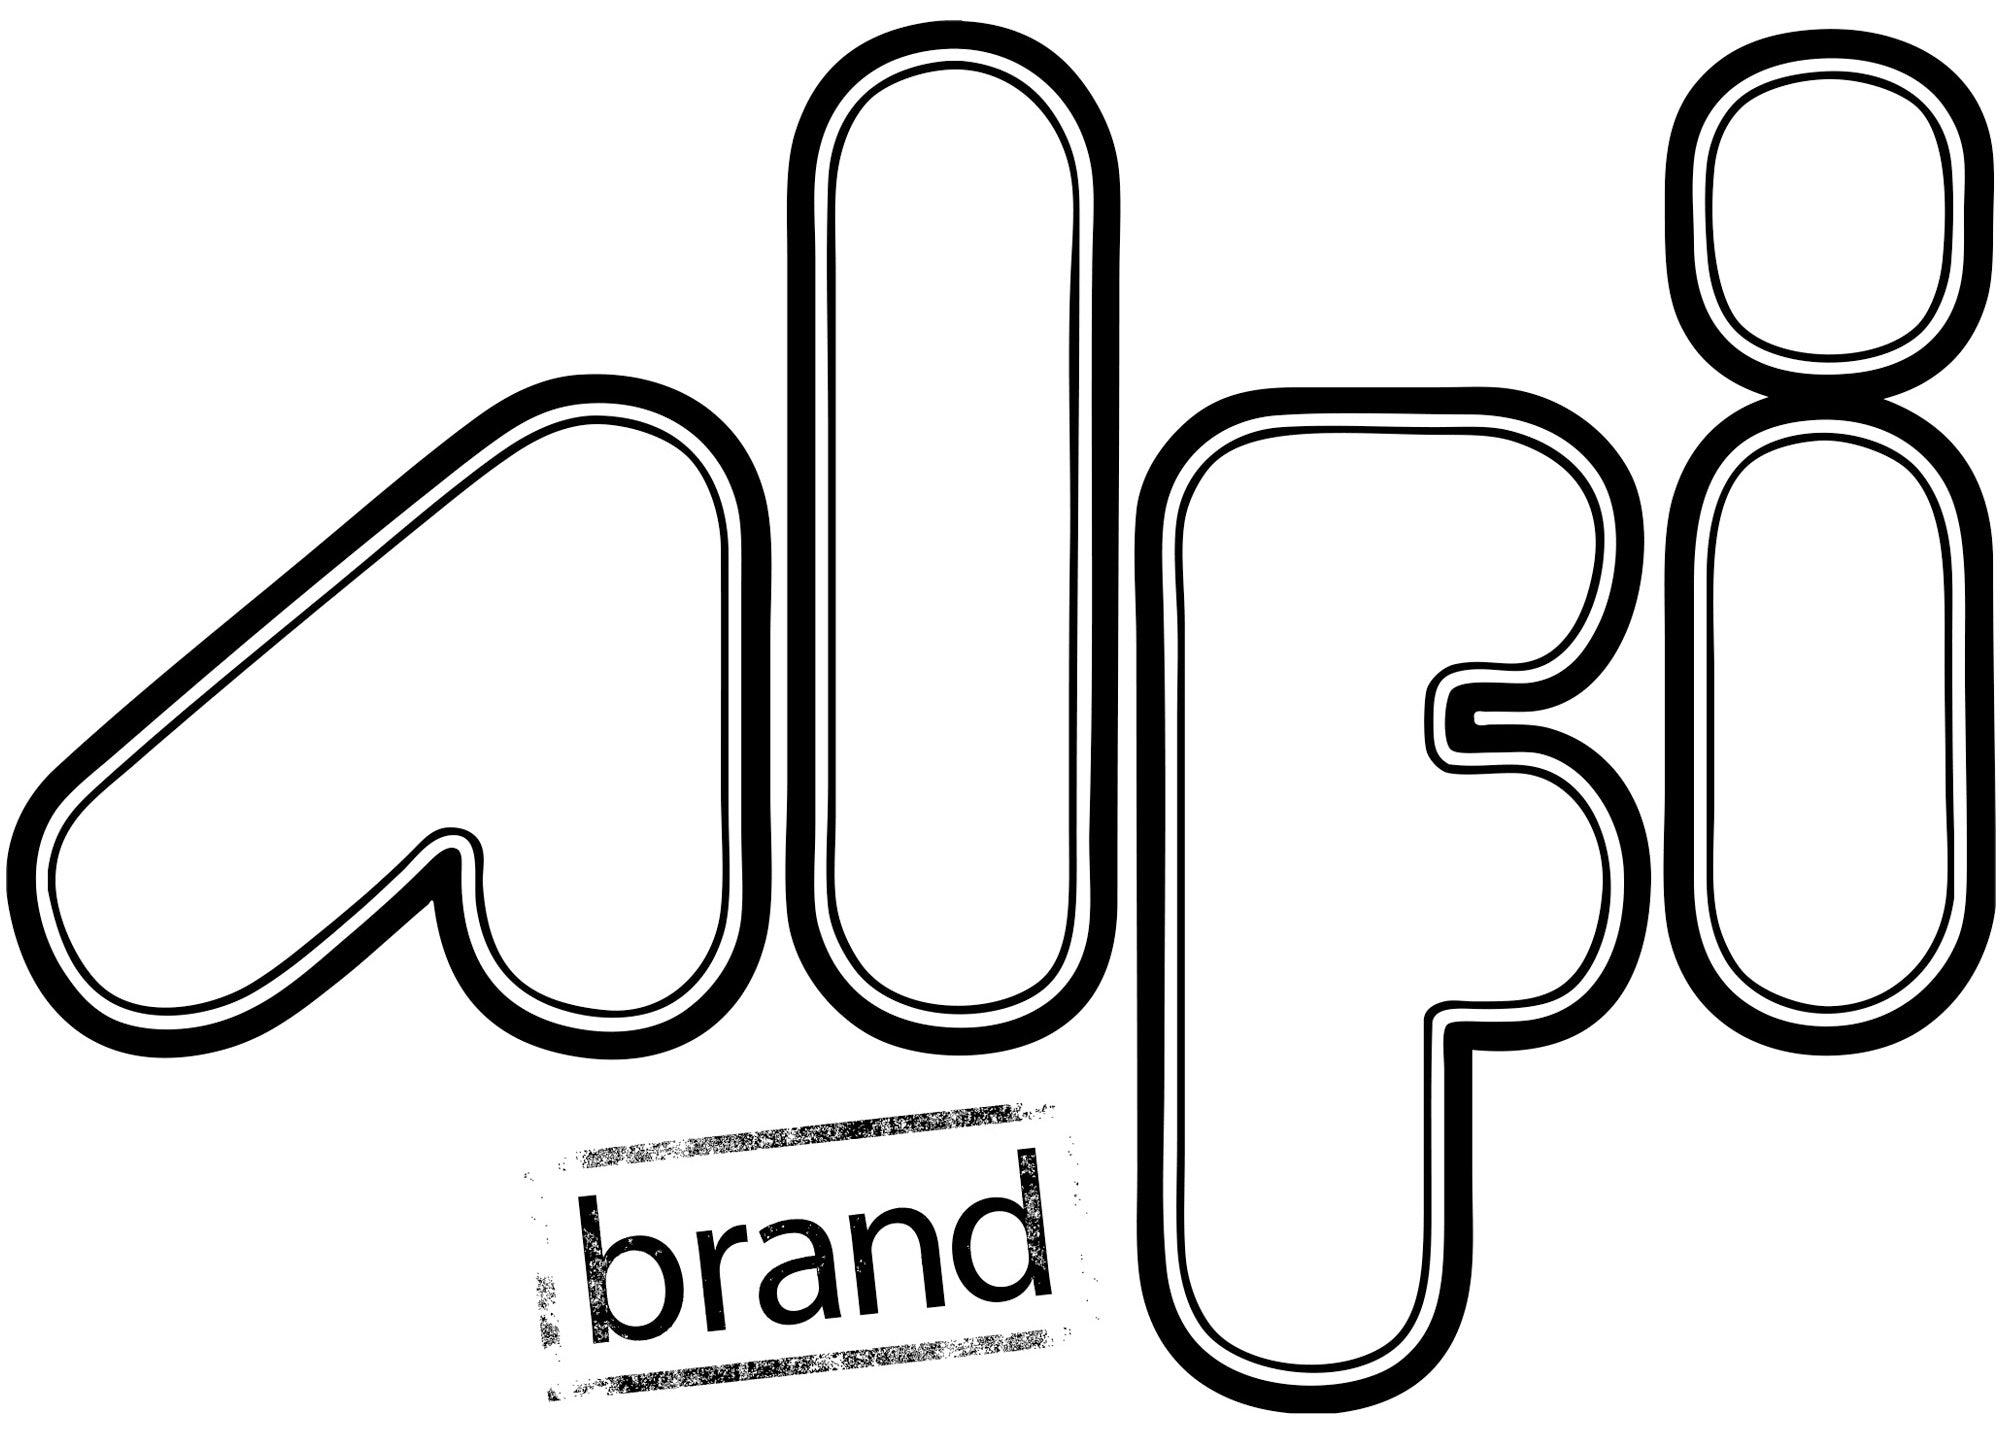 ALFI Brand - Polished Chrome 14" Folding Teak Wood Shower Seat Bench | ABS14-PC